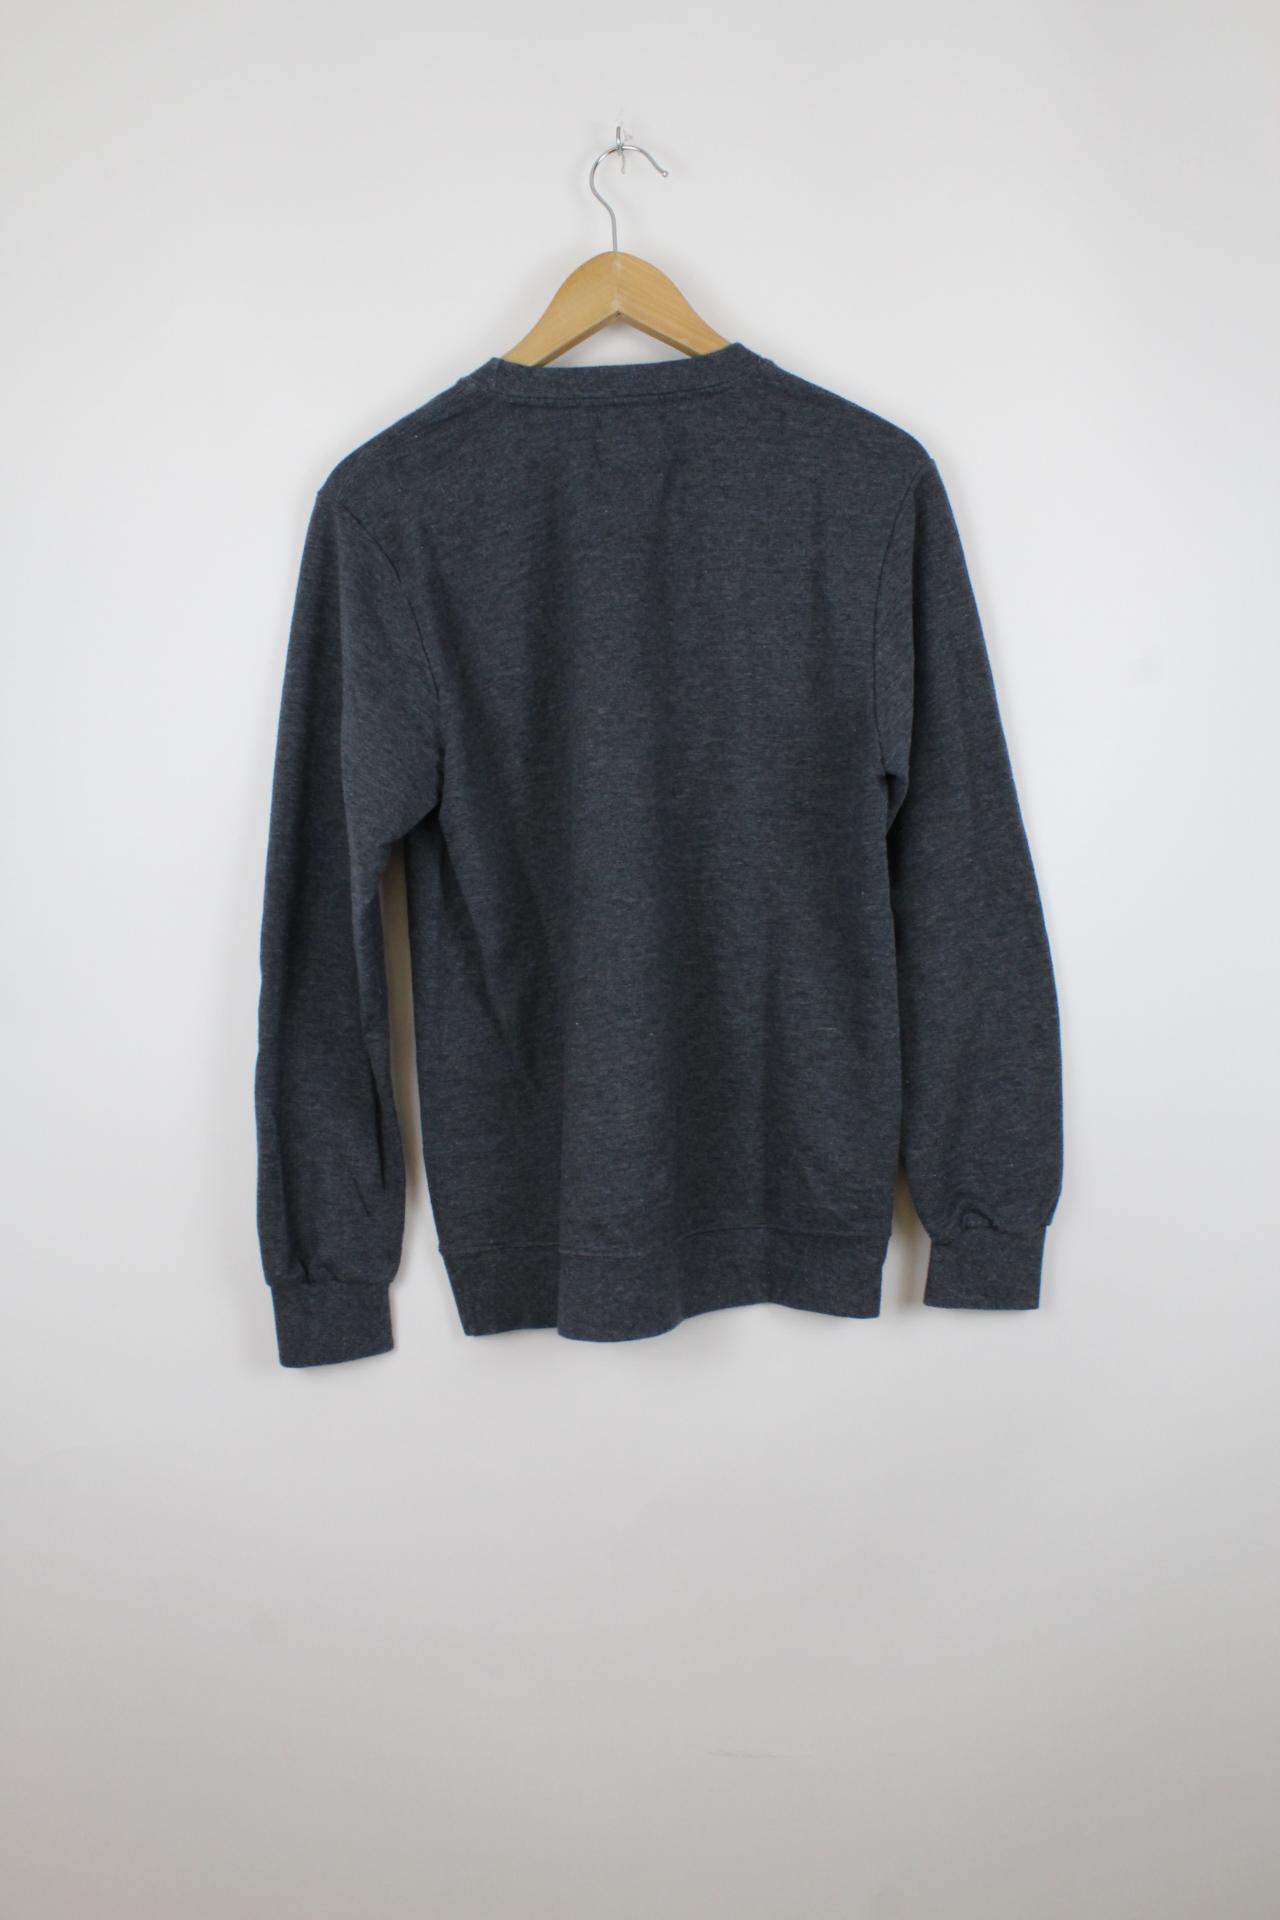 Vintage Sweater - M